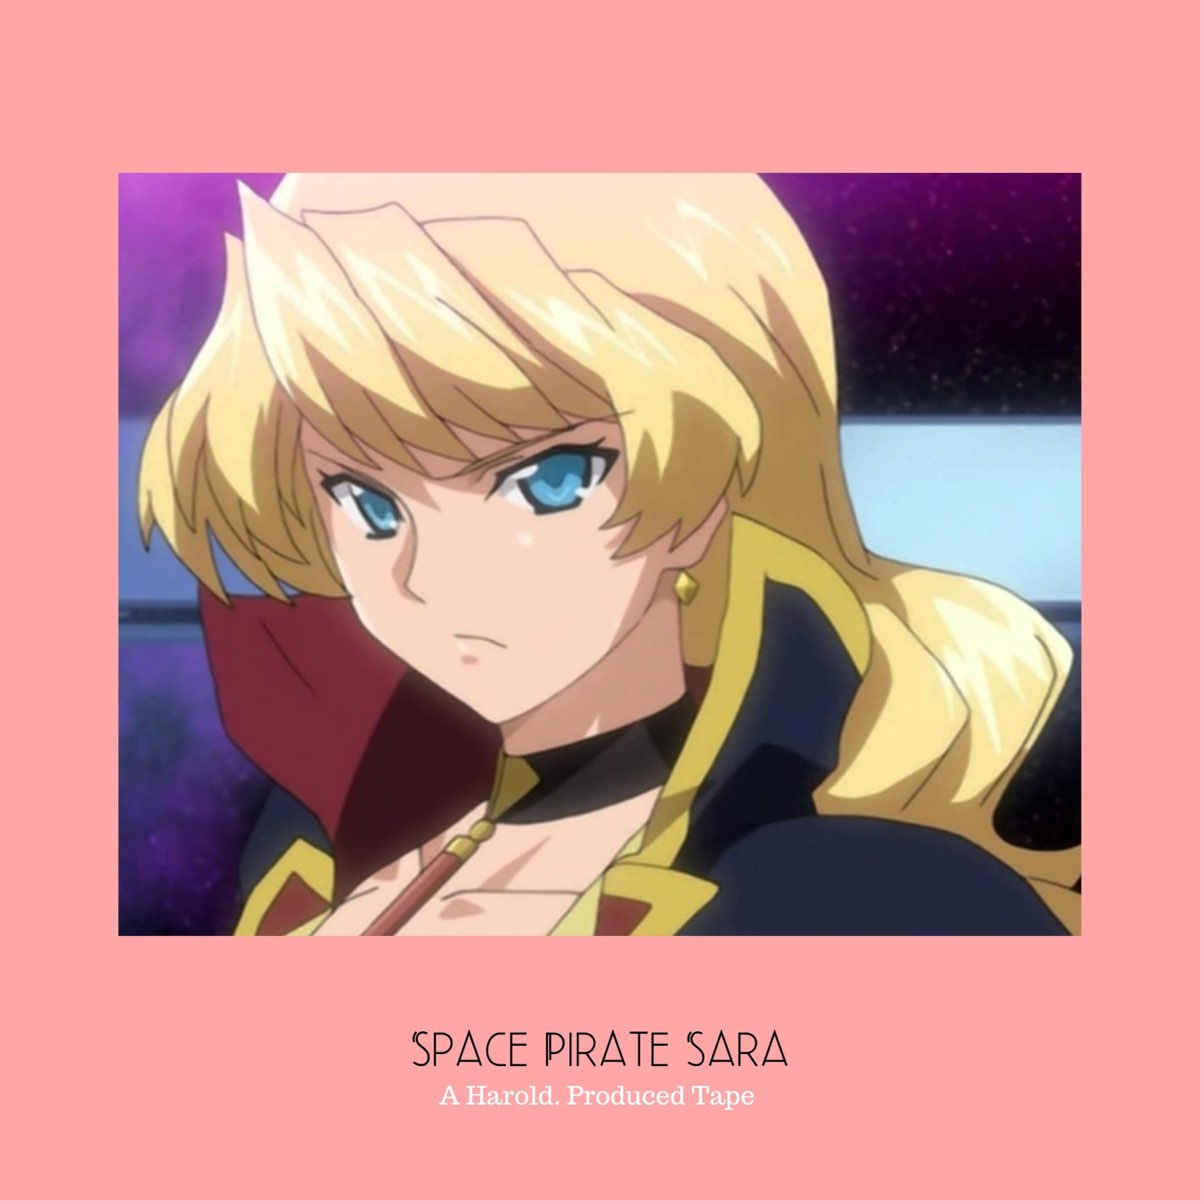 Space pirate sara